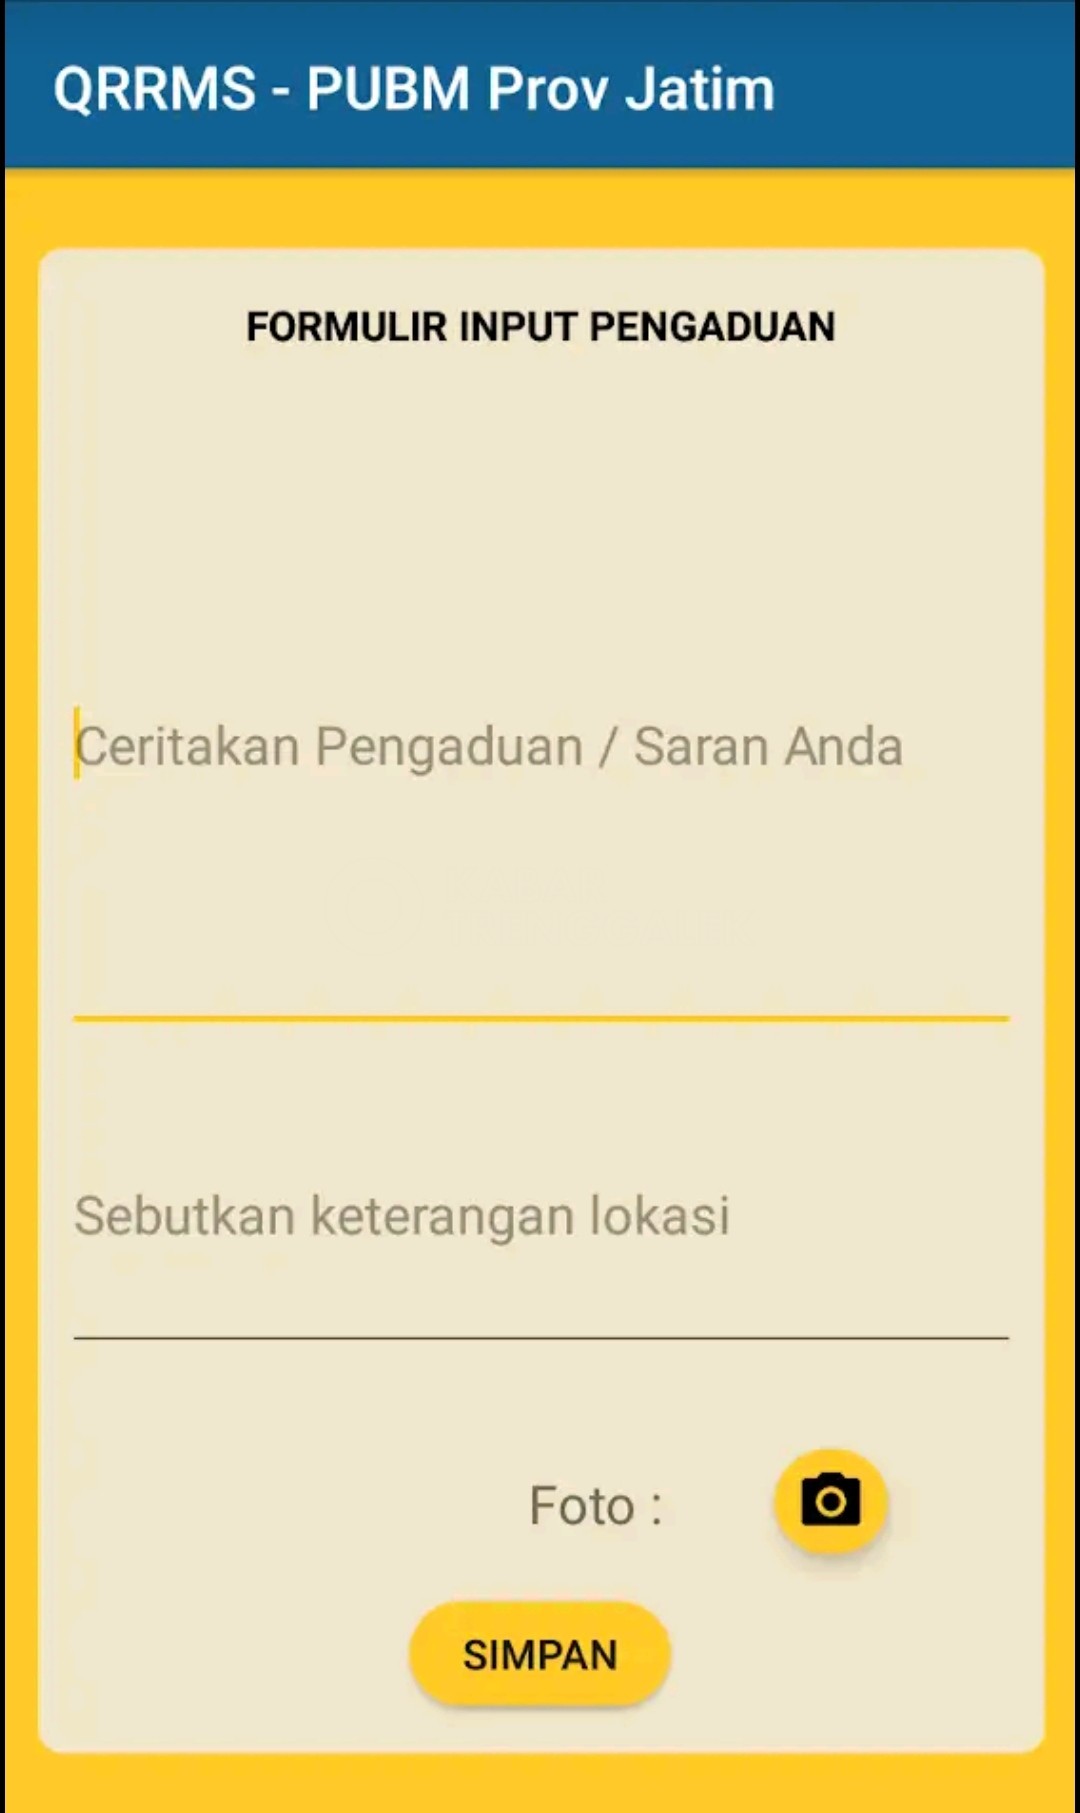 Tampilan formulir pengaduan di aplikasi QRRMS Jawa Timur